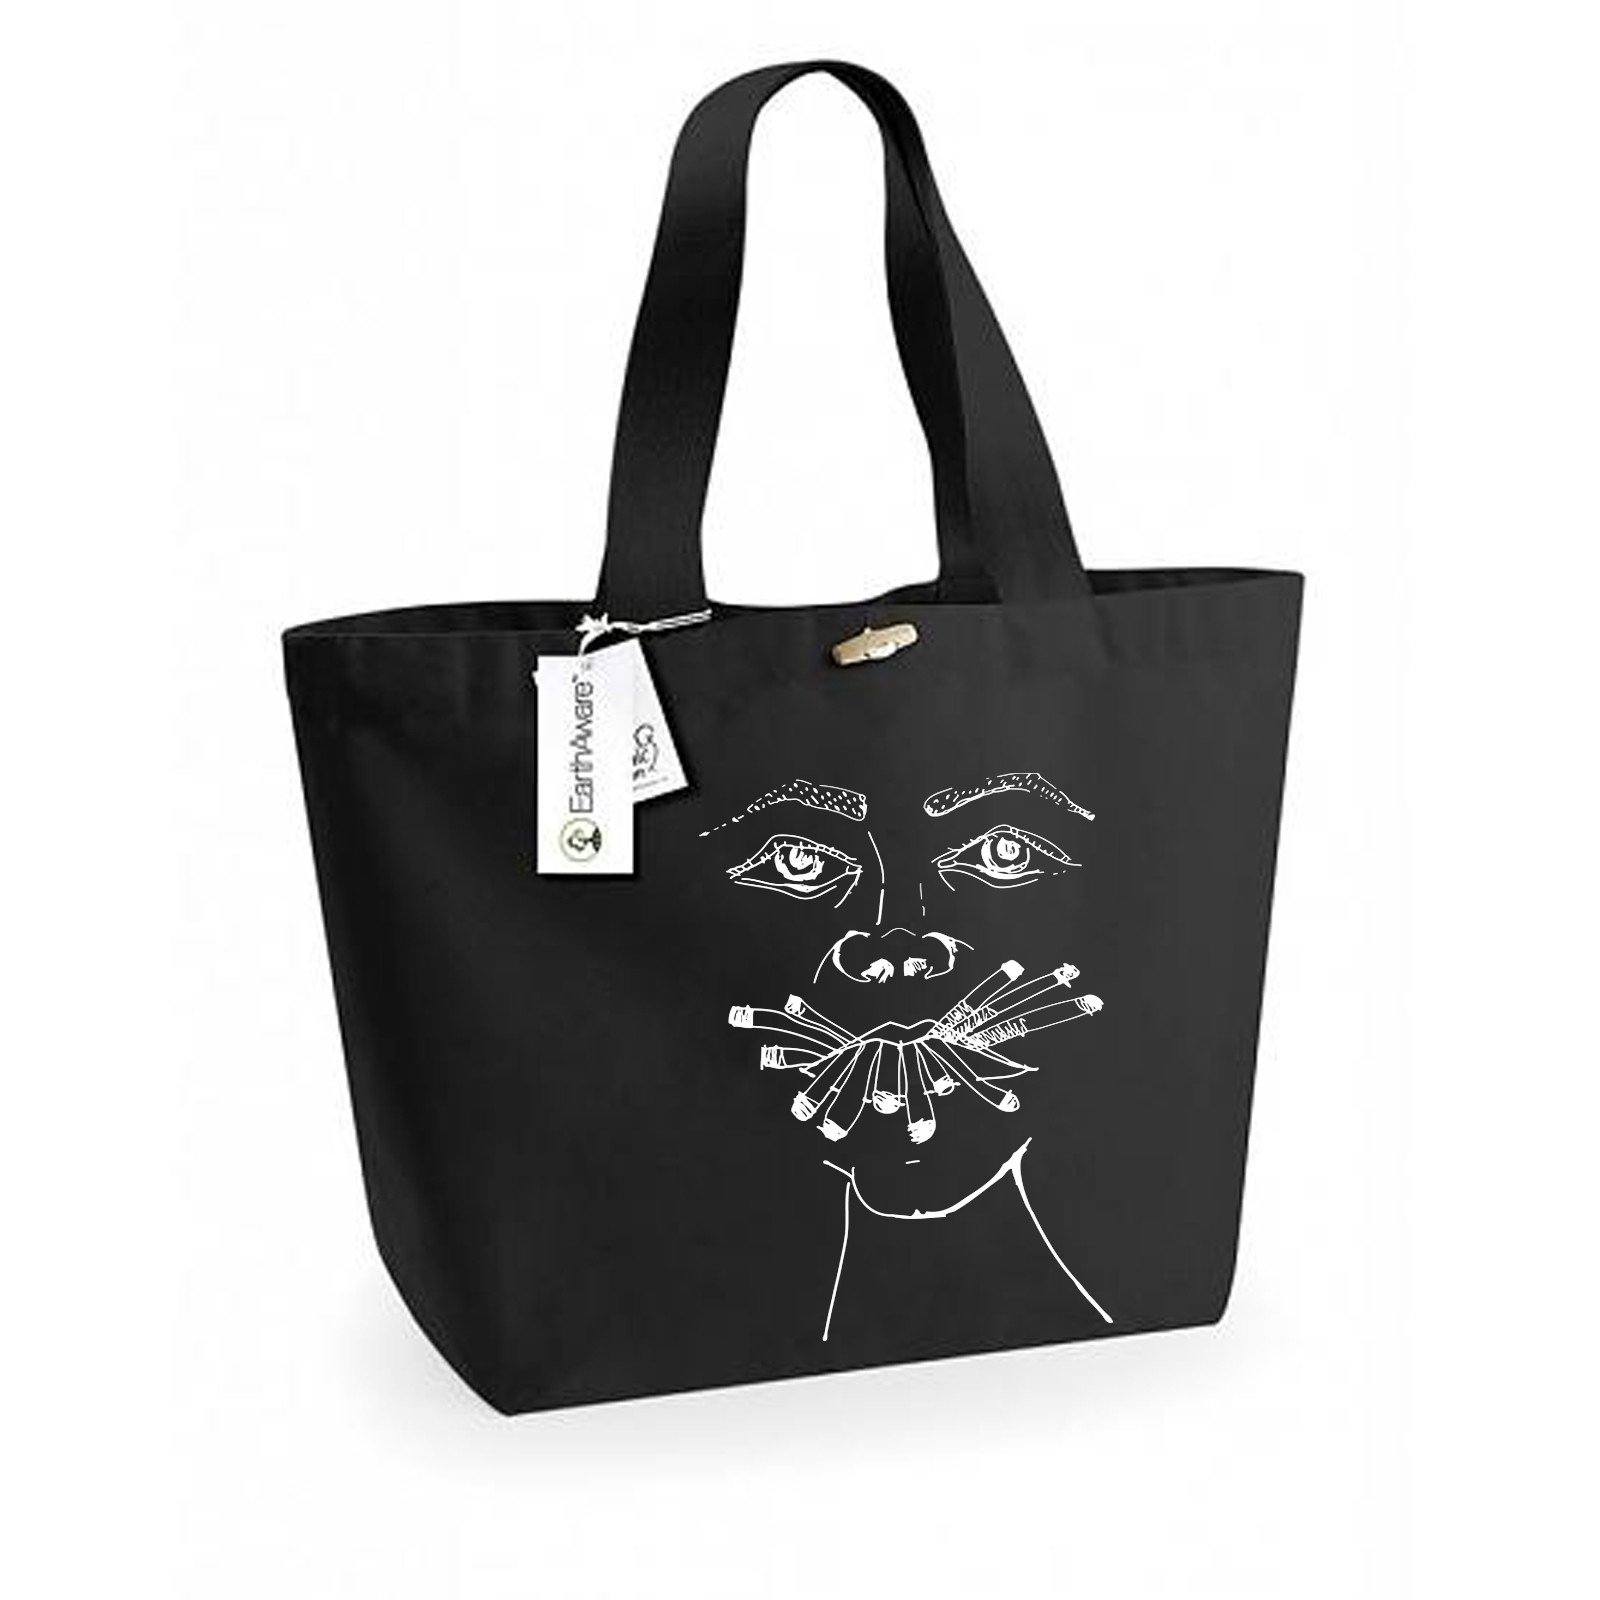 Bags - Large Handbag, Black